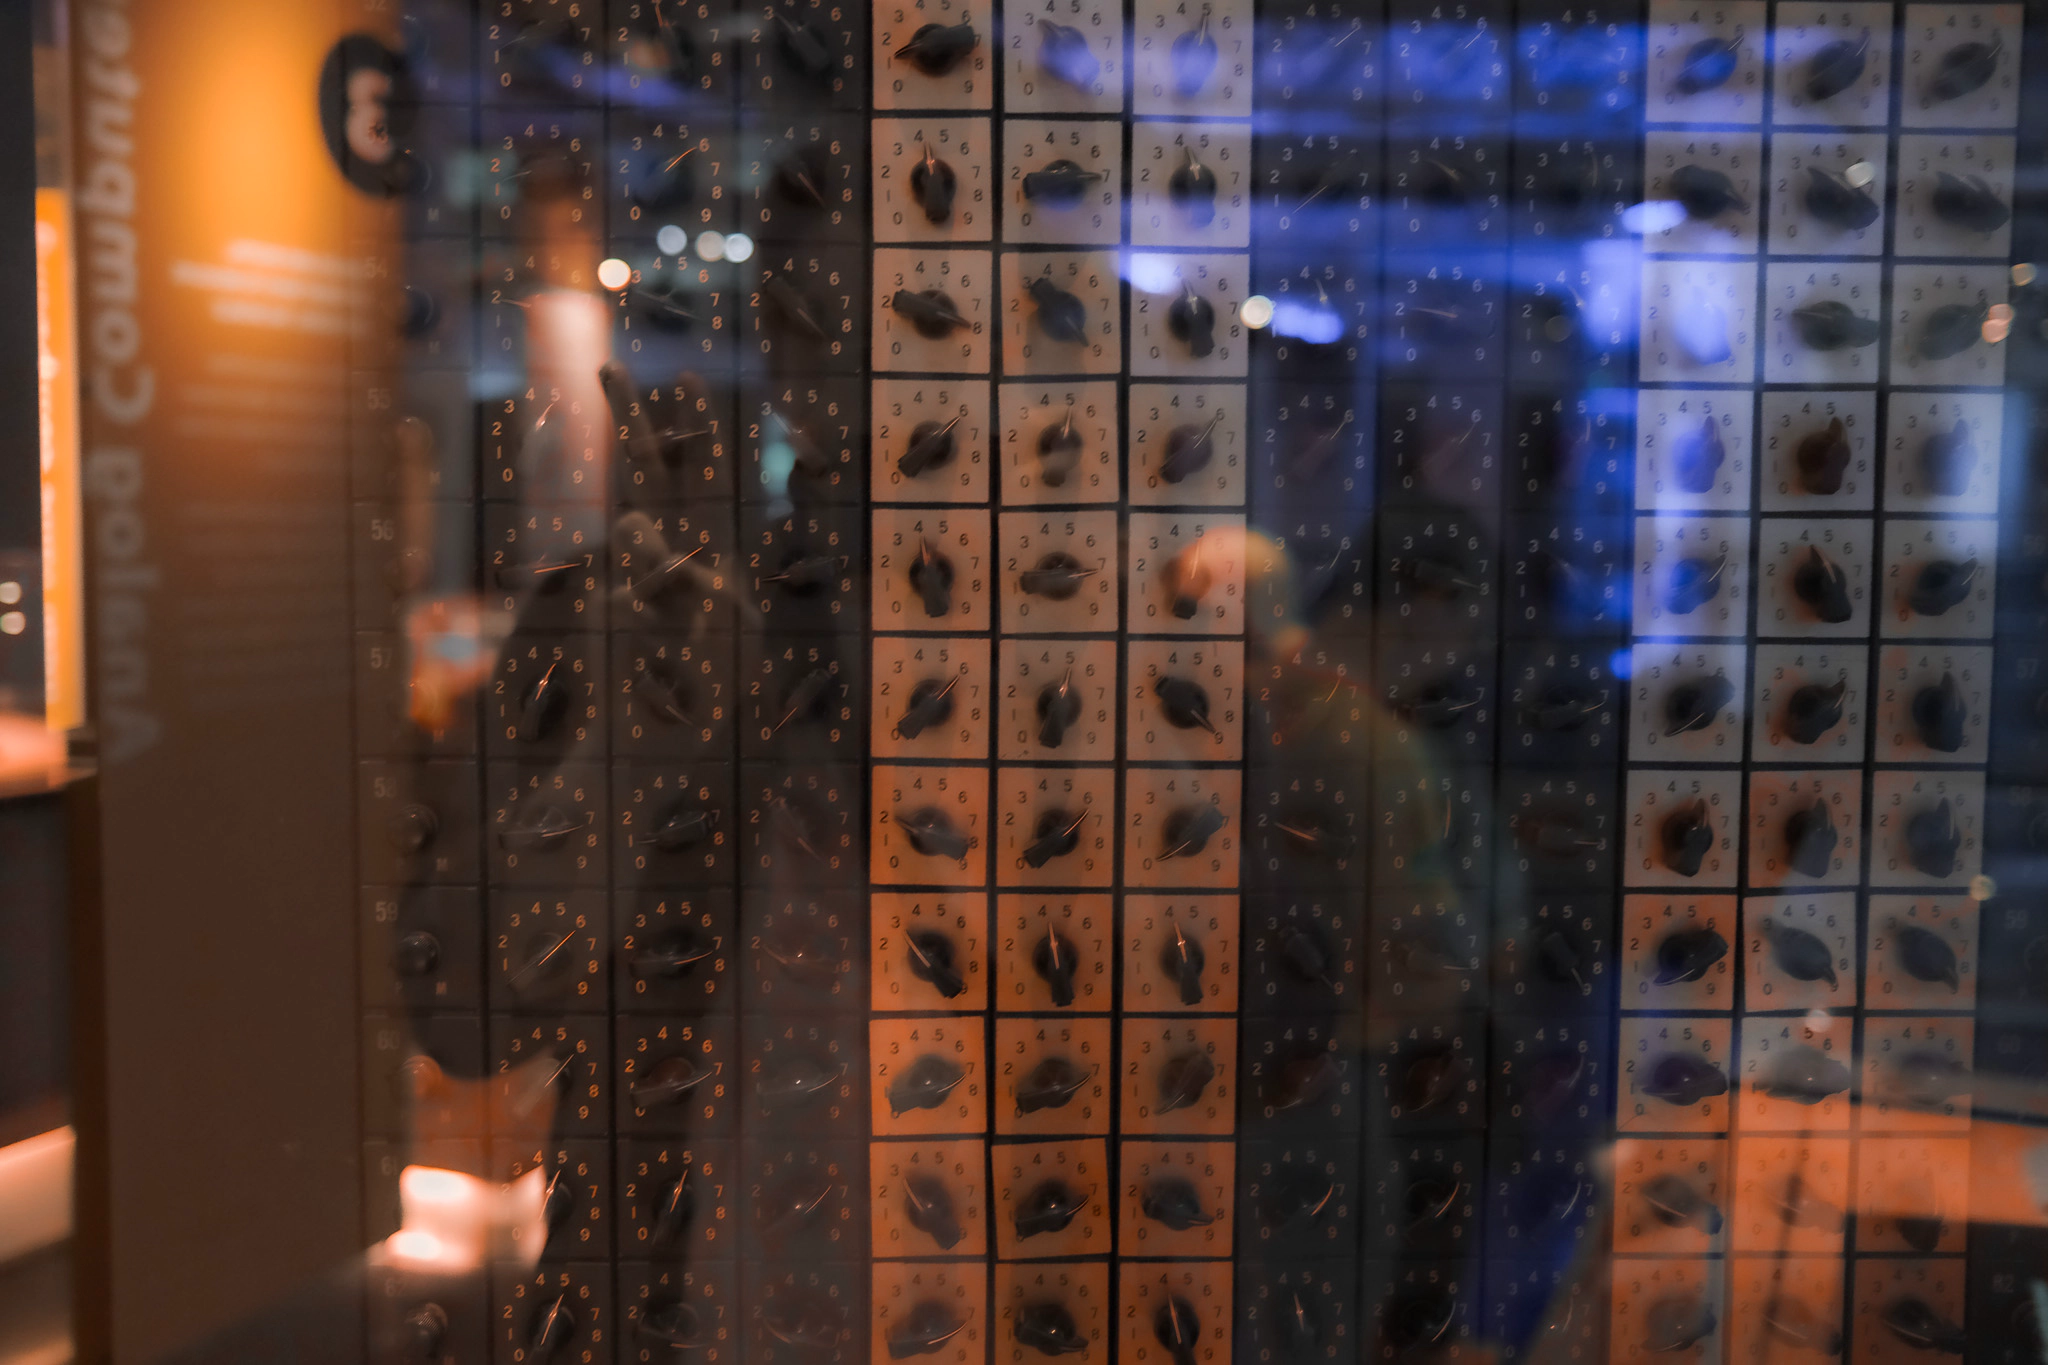 A photograph of the ENIAC